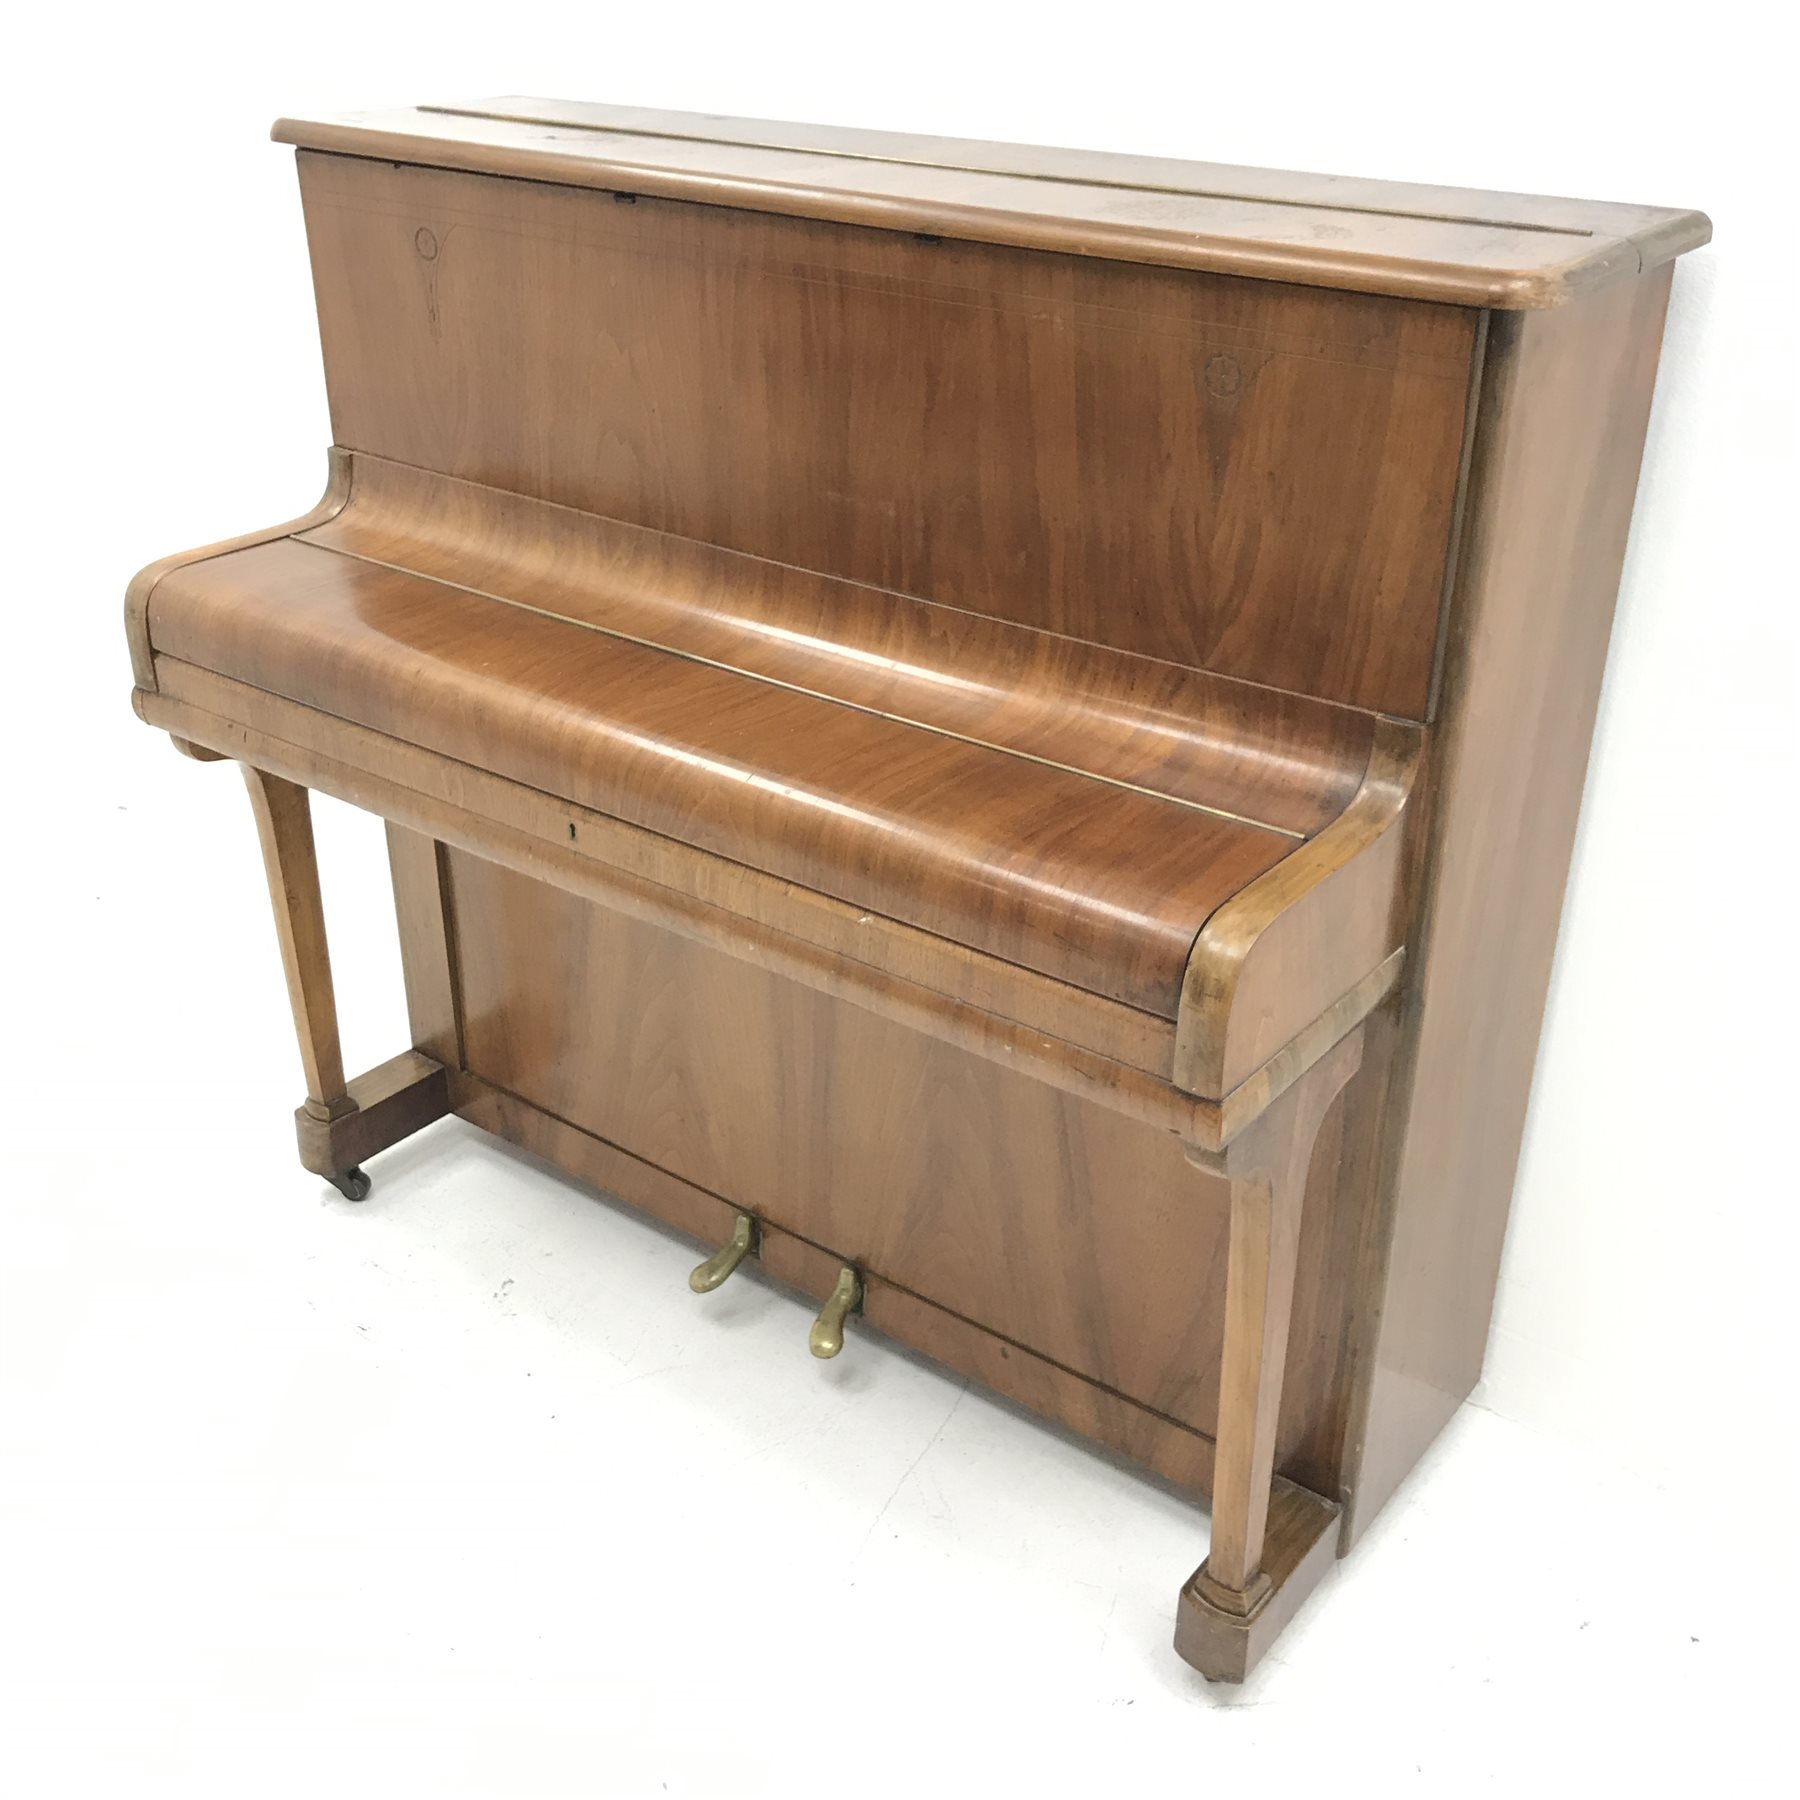 Godfrey walnut cased overstrung upright piano, W124cm, H113cm - Image 4 of 10